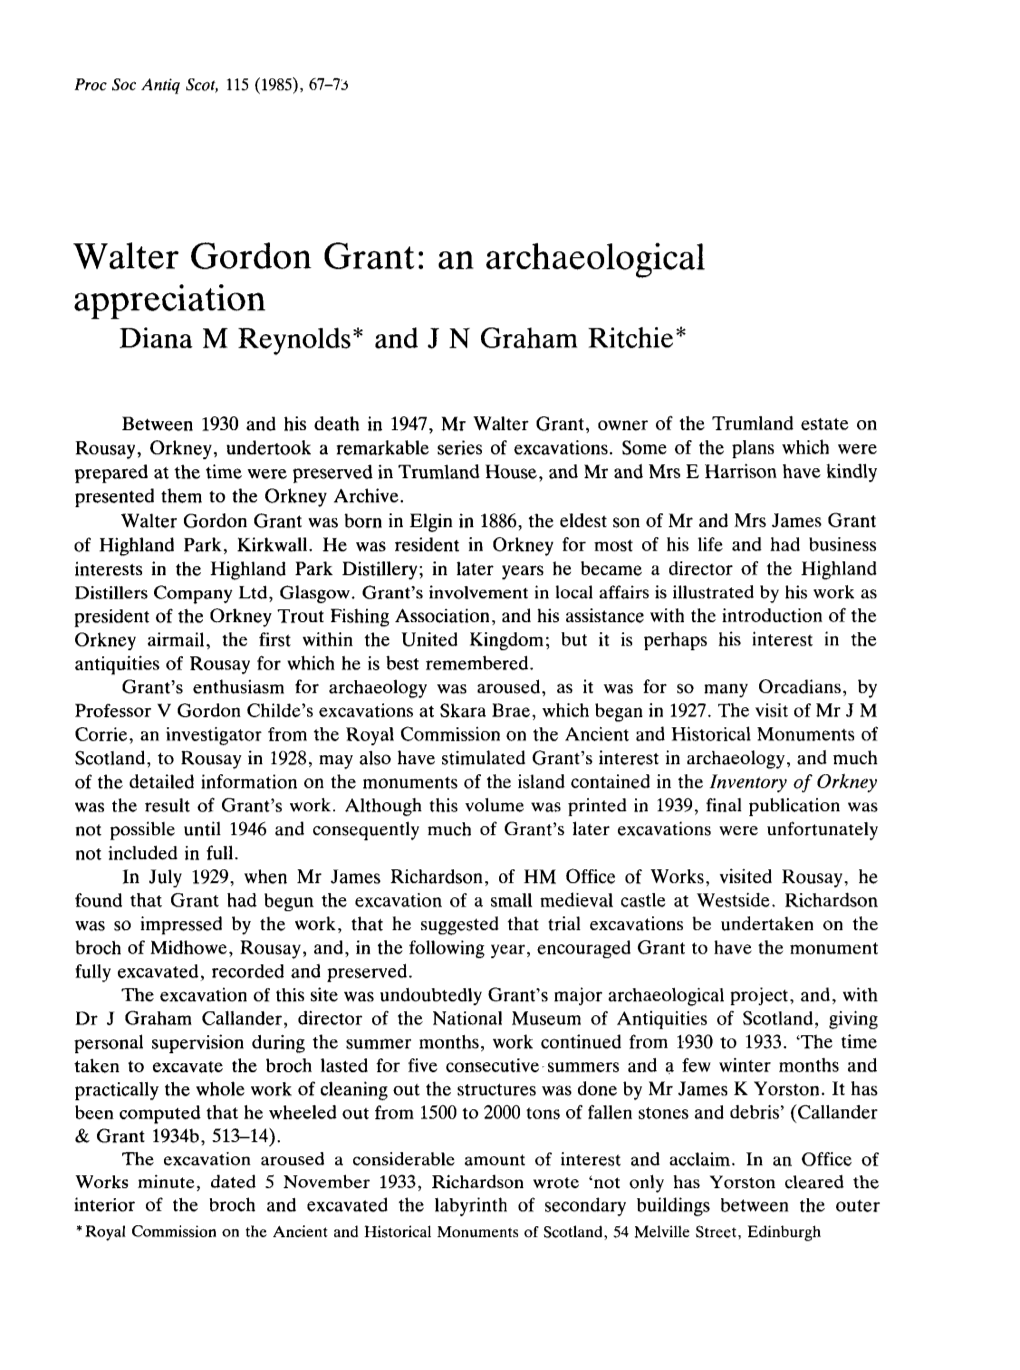 Walter Gordon Grant: an Archaeological Appreciation Dian Reynoldsam Grahan J D M*An Ritchie*